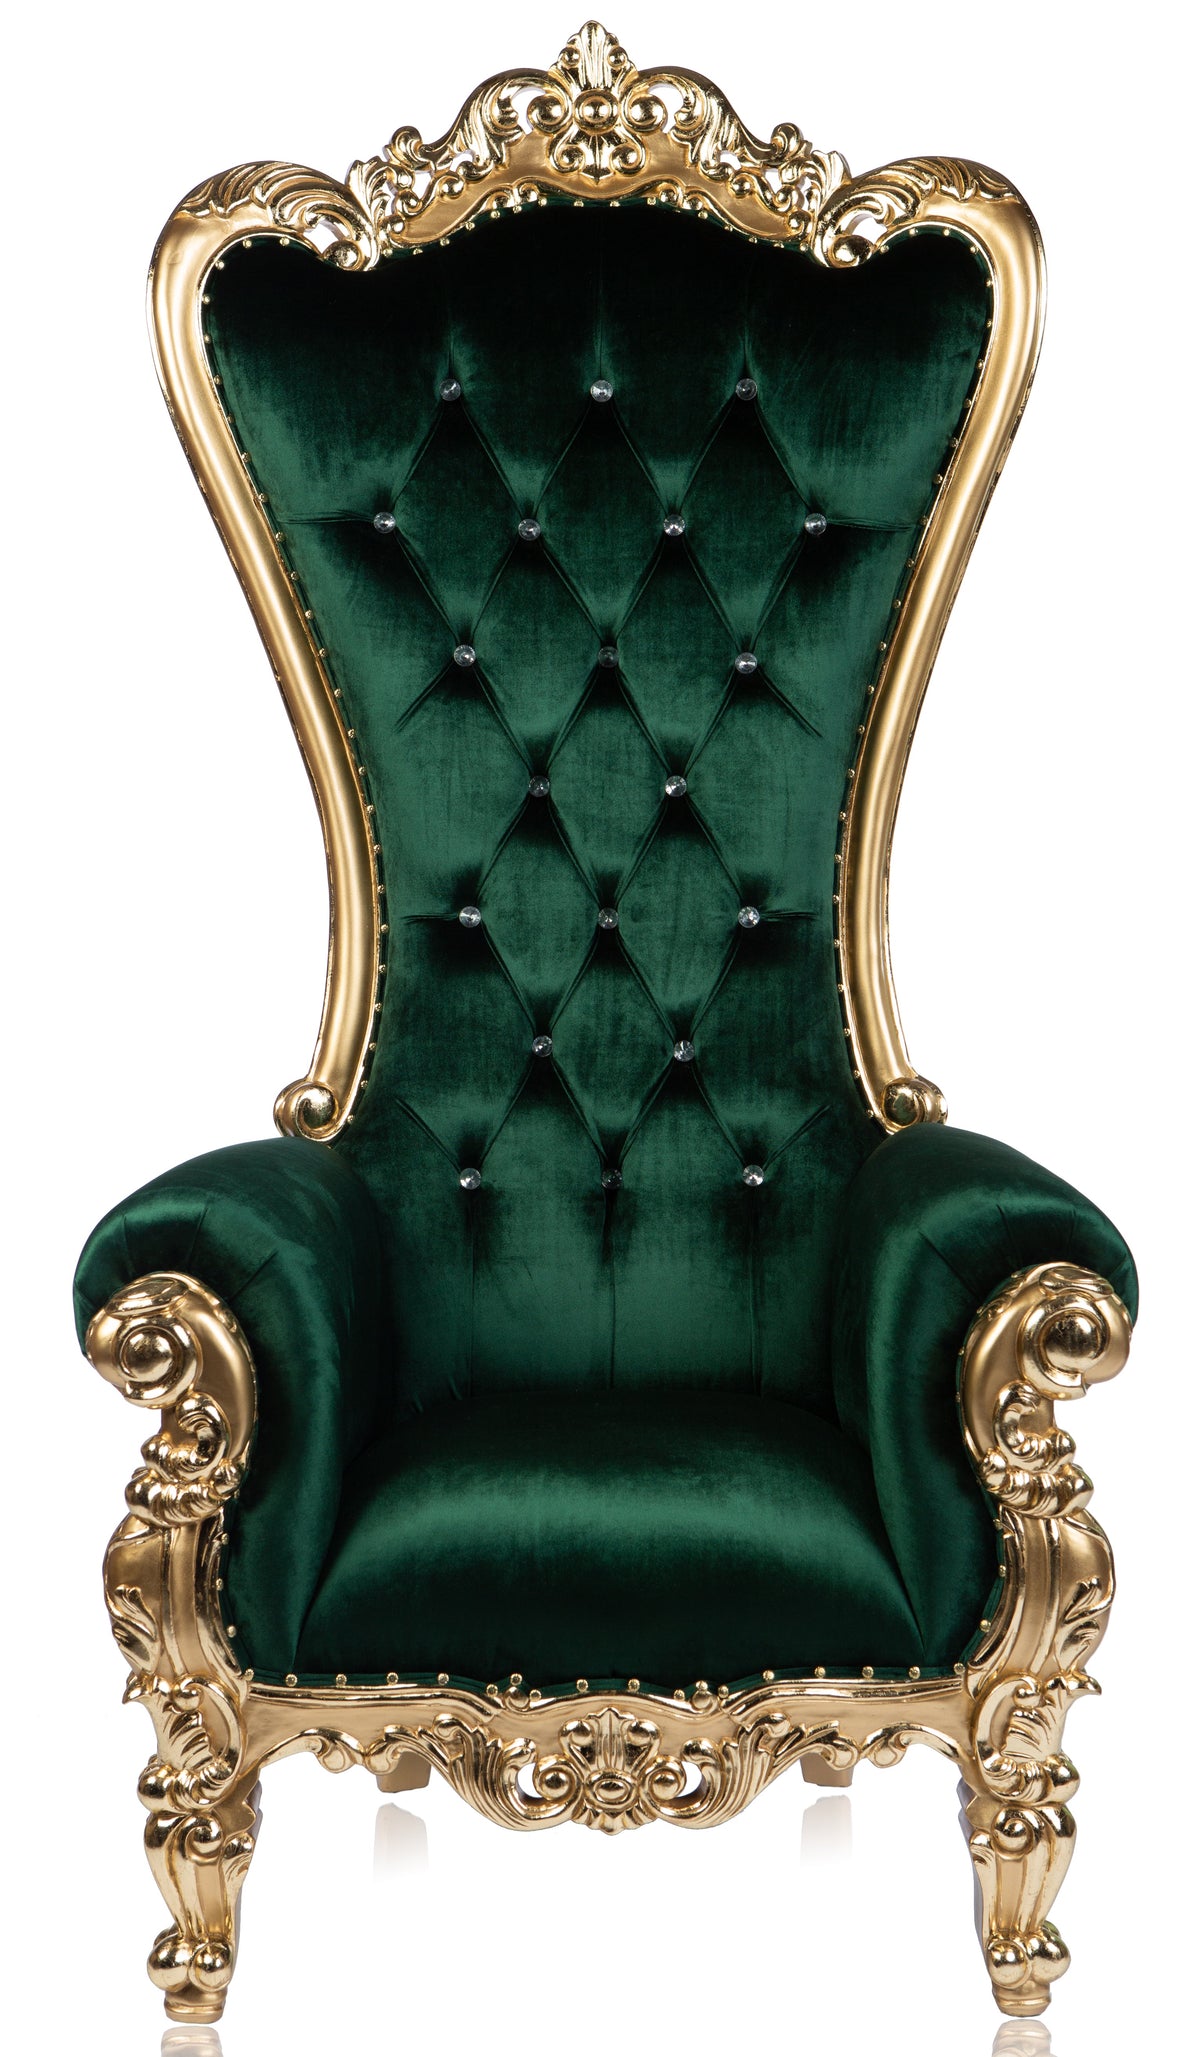 "$Money" Shellback Throne (Green/Gold)